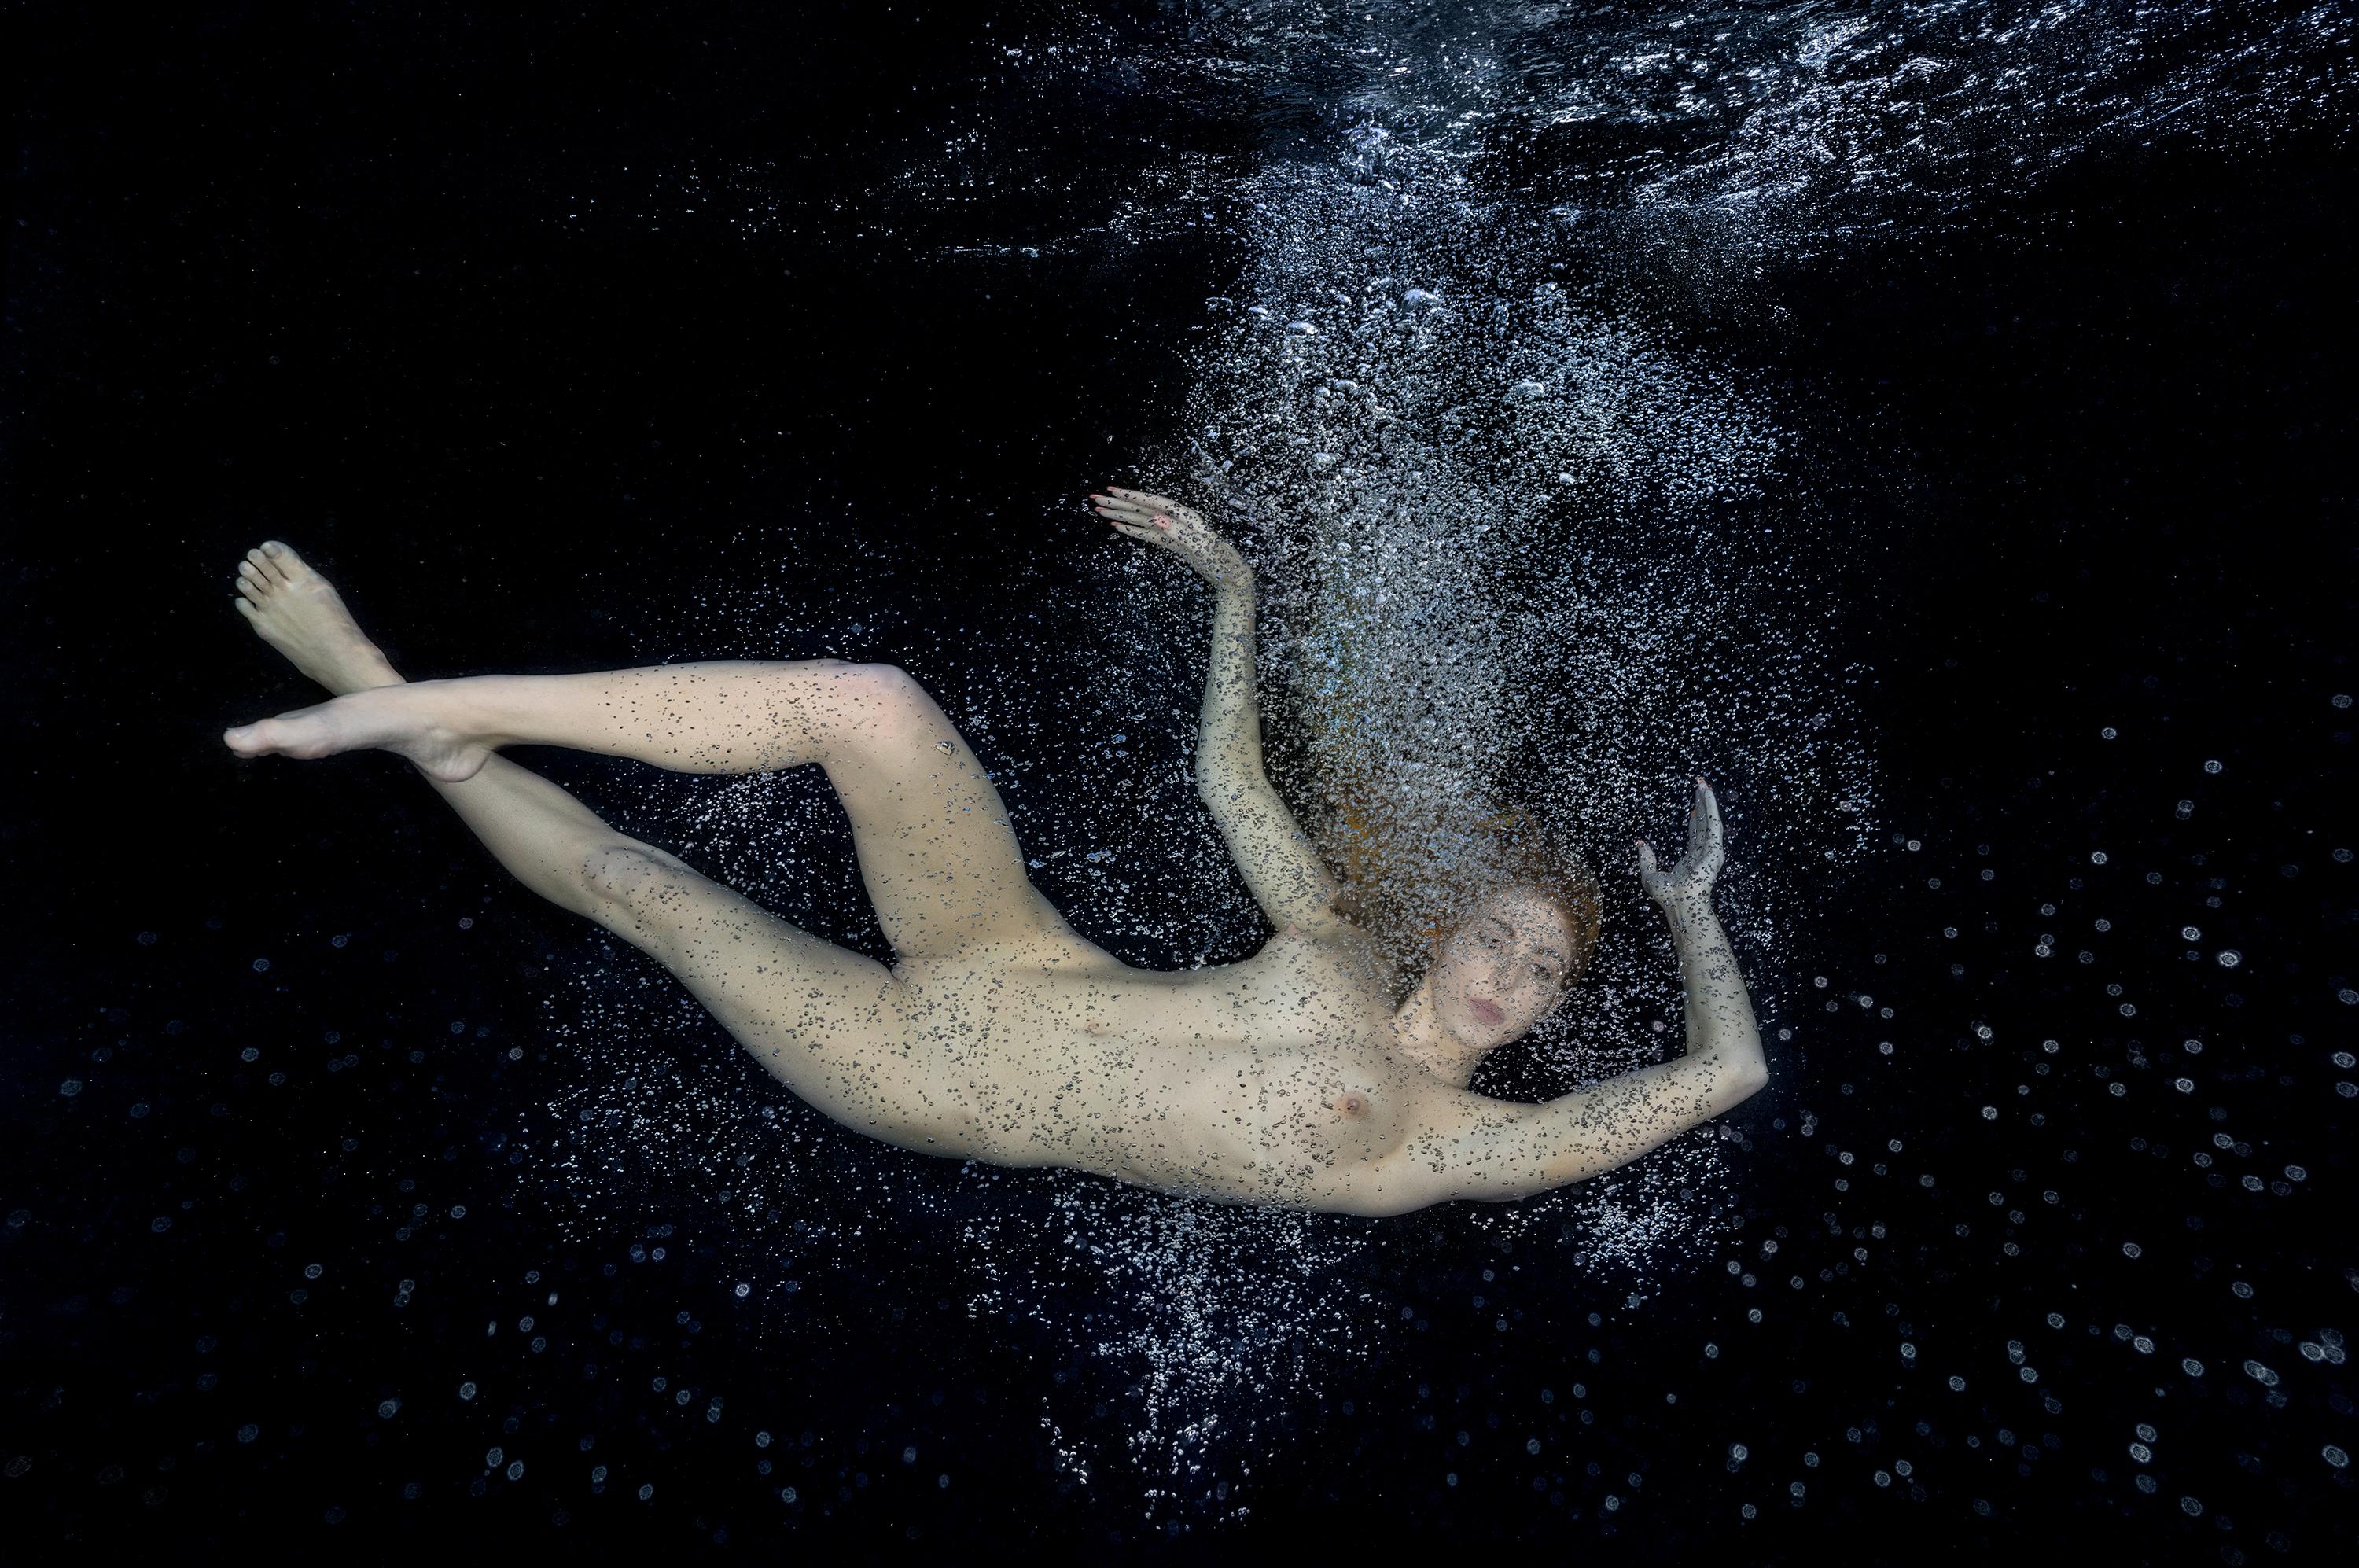 Danae - underwater nude photograph - archival pigment print 23x35"